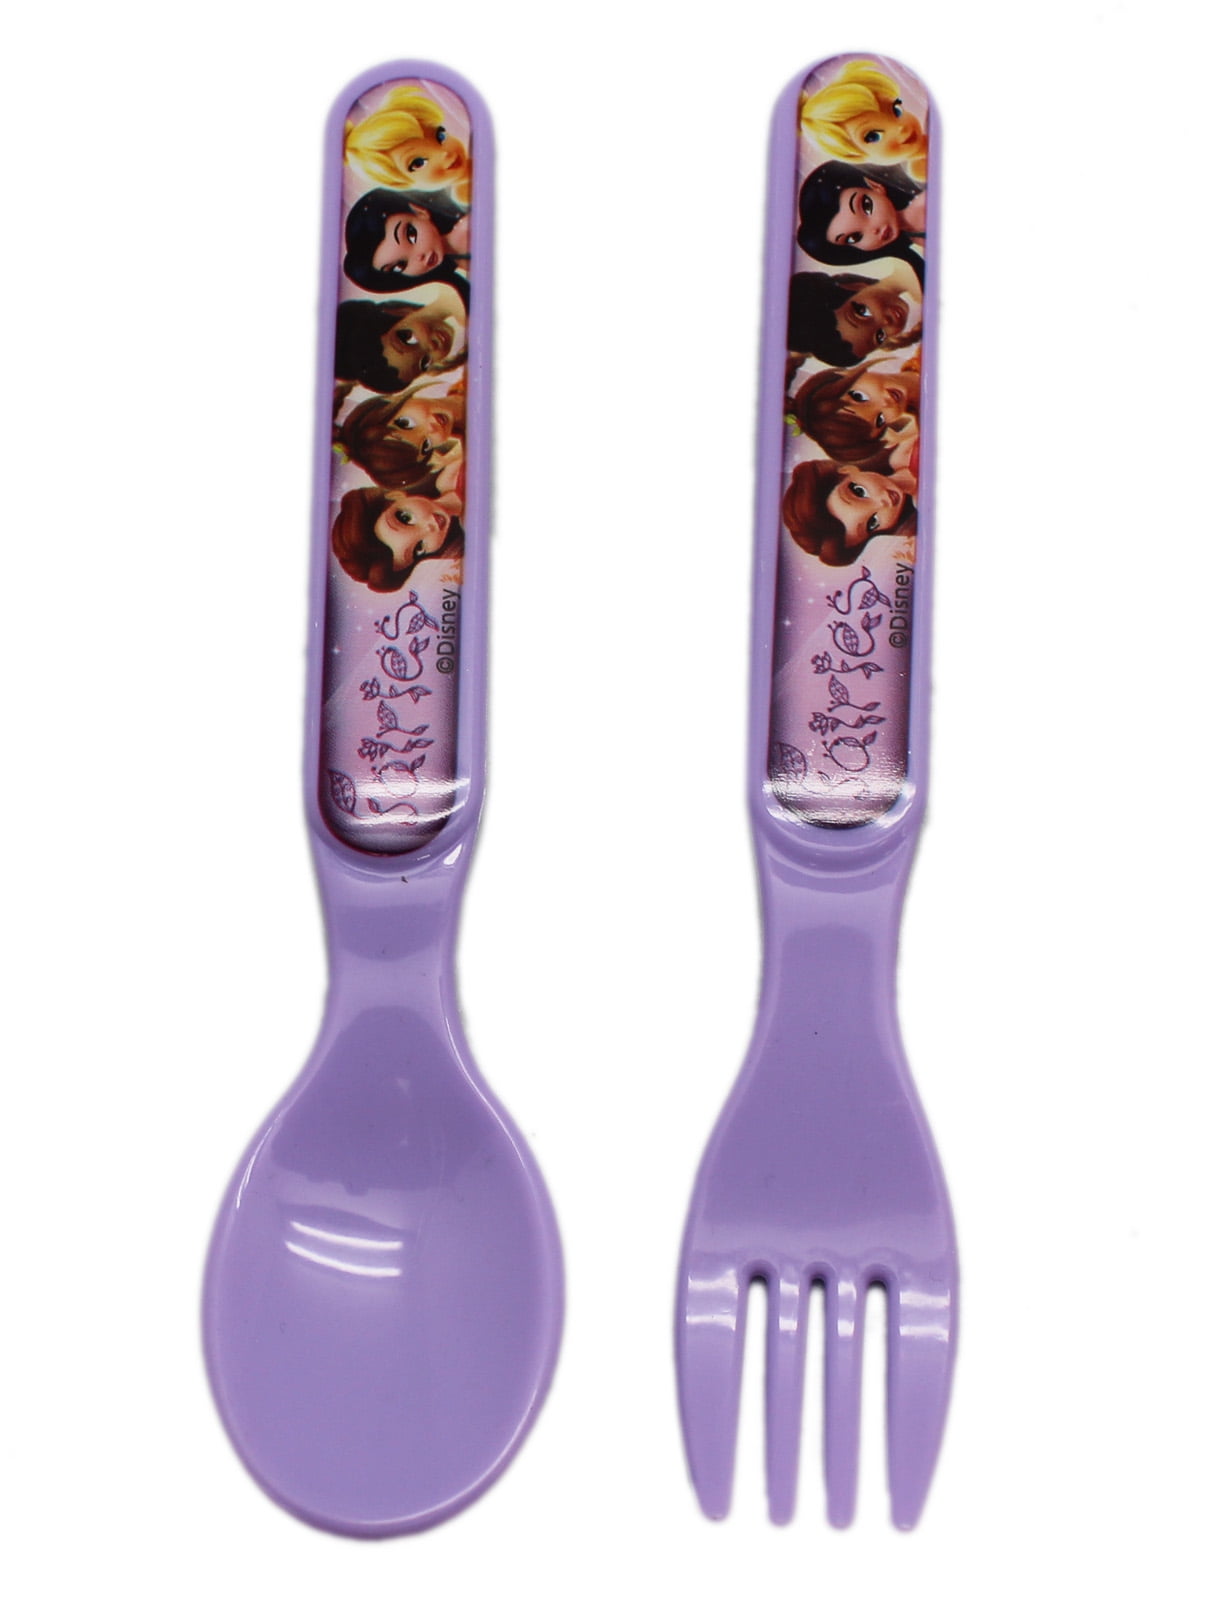 new spoons forks flatware 4 piece BPA free Dora Explorer NICK  spoon fork 3 age 